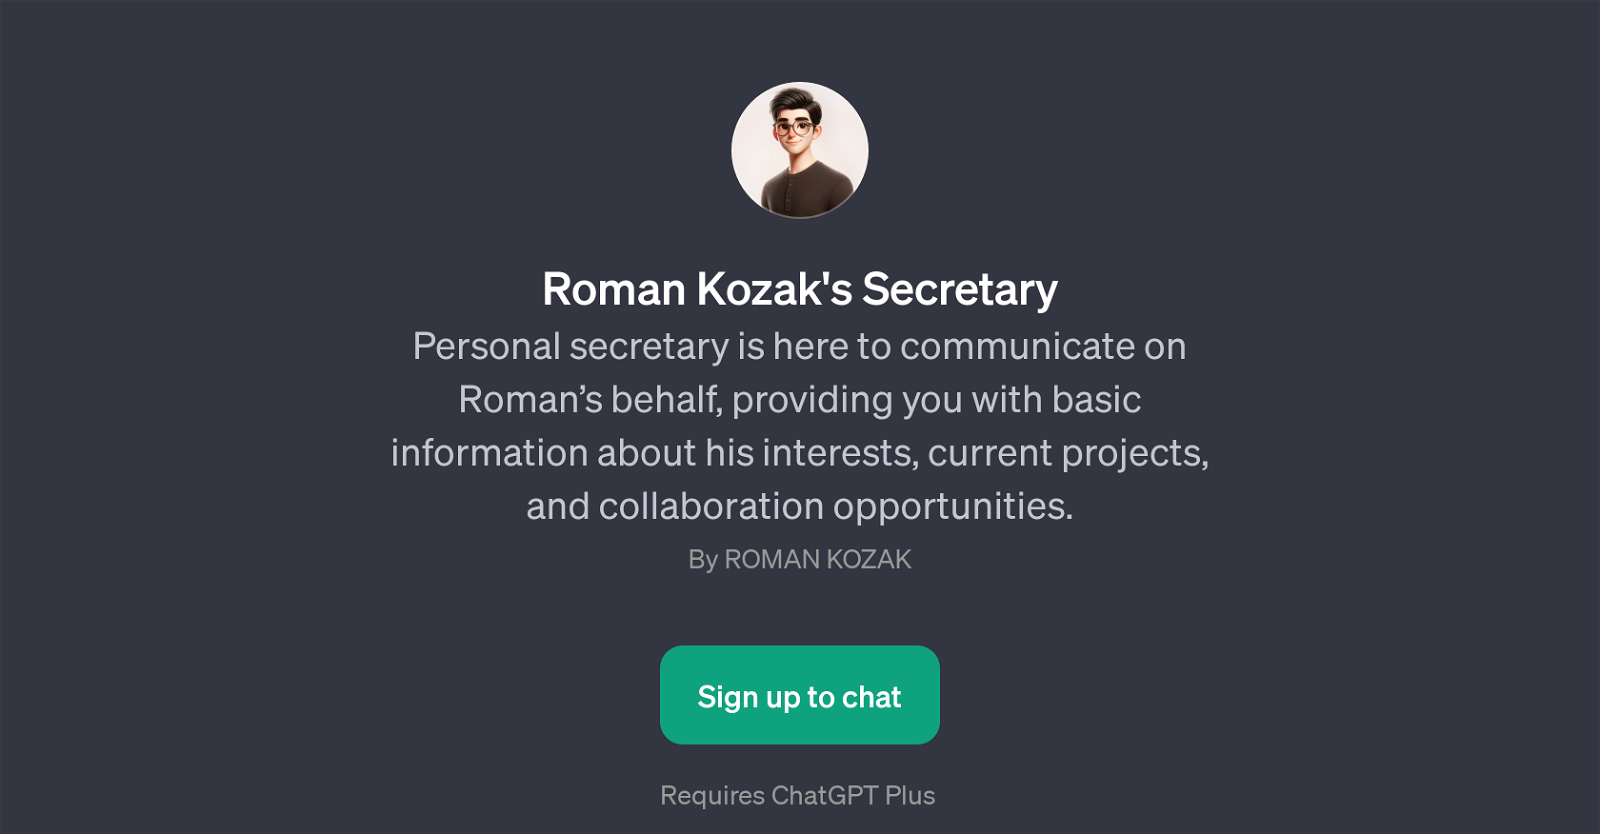 Roman Kozak's Secretary website